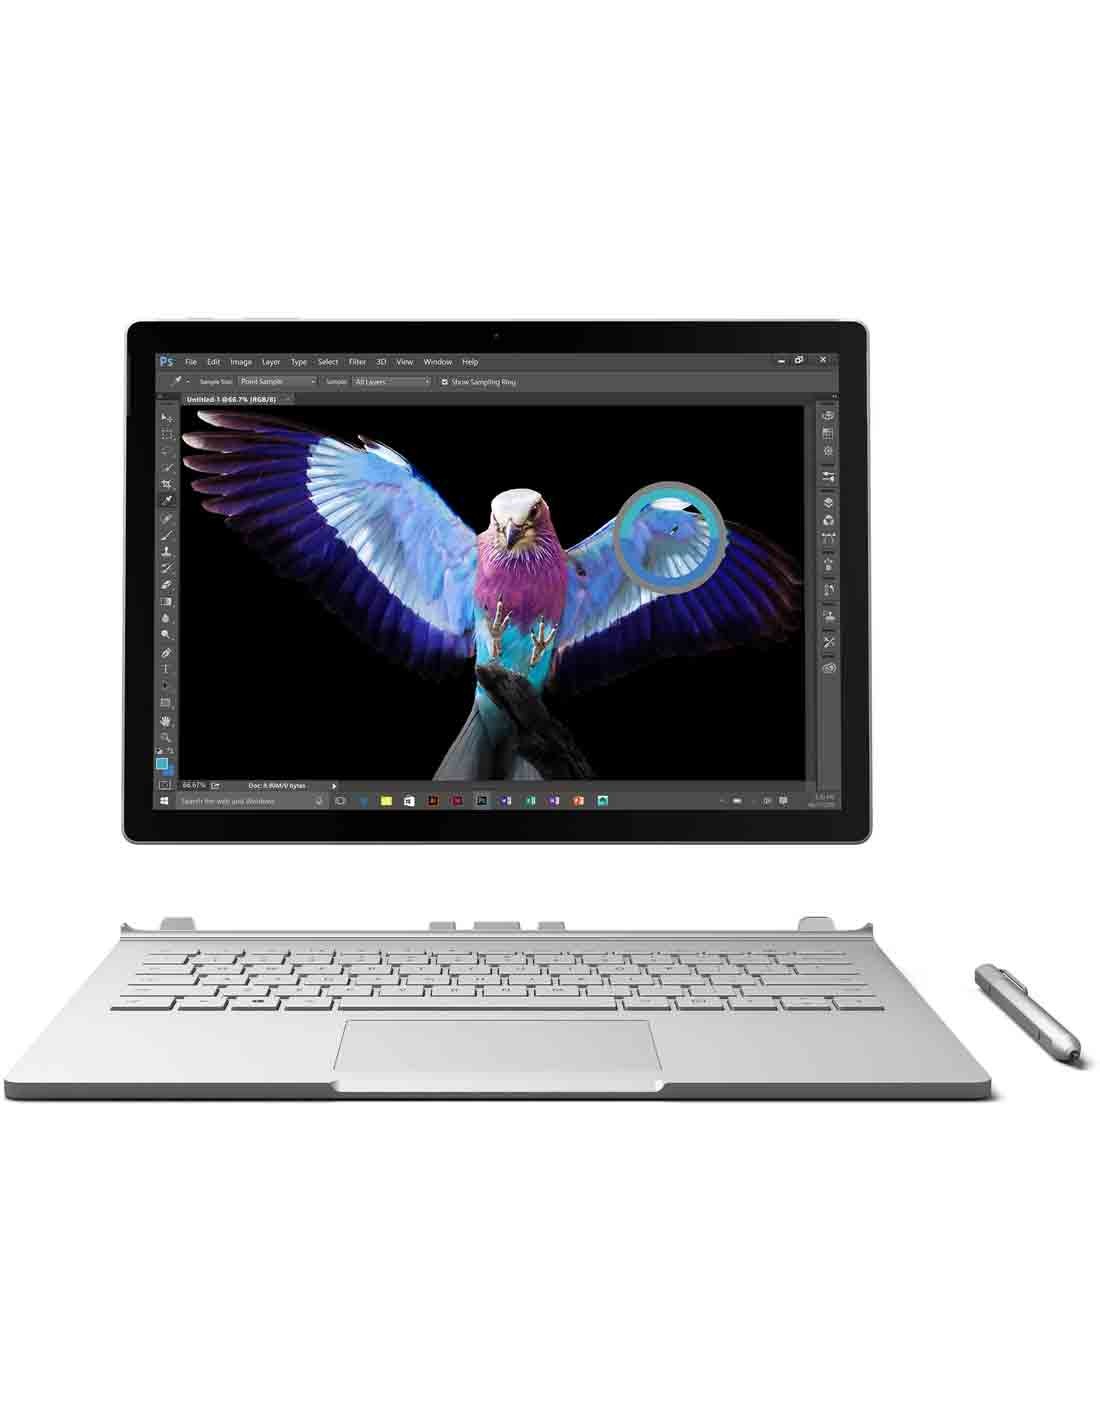 Microsoft Surface Book Intel Core i5 8GB Memory 256GB SSD at a Cheap Price in Dubai Online Store